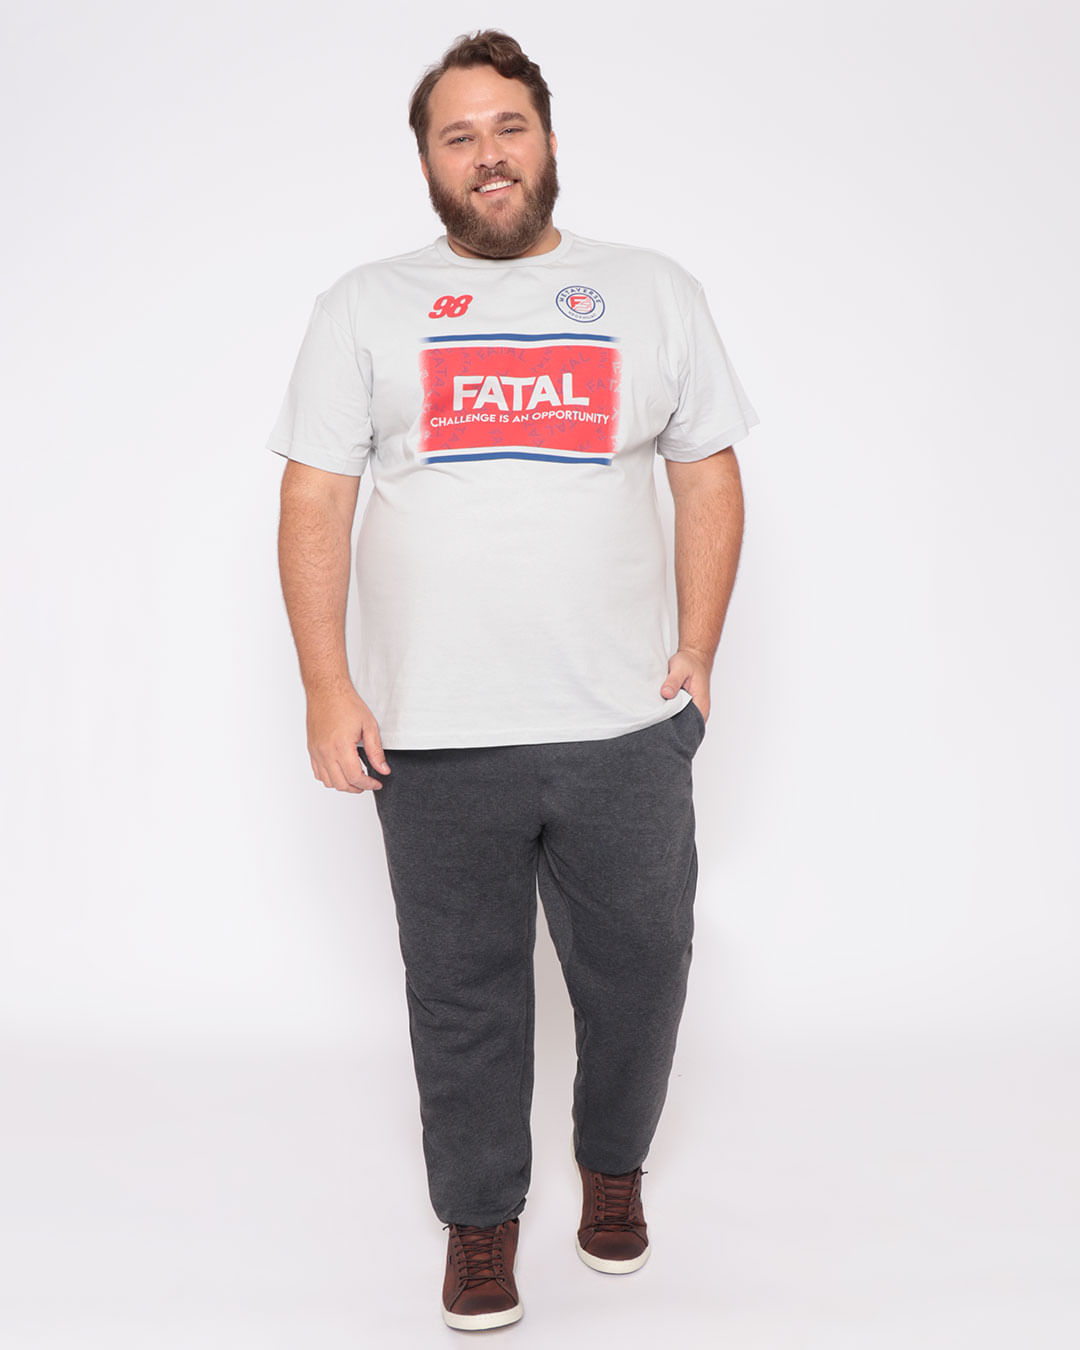 Camiseta Plus Size Masculina Estampada Fatal Cinza